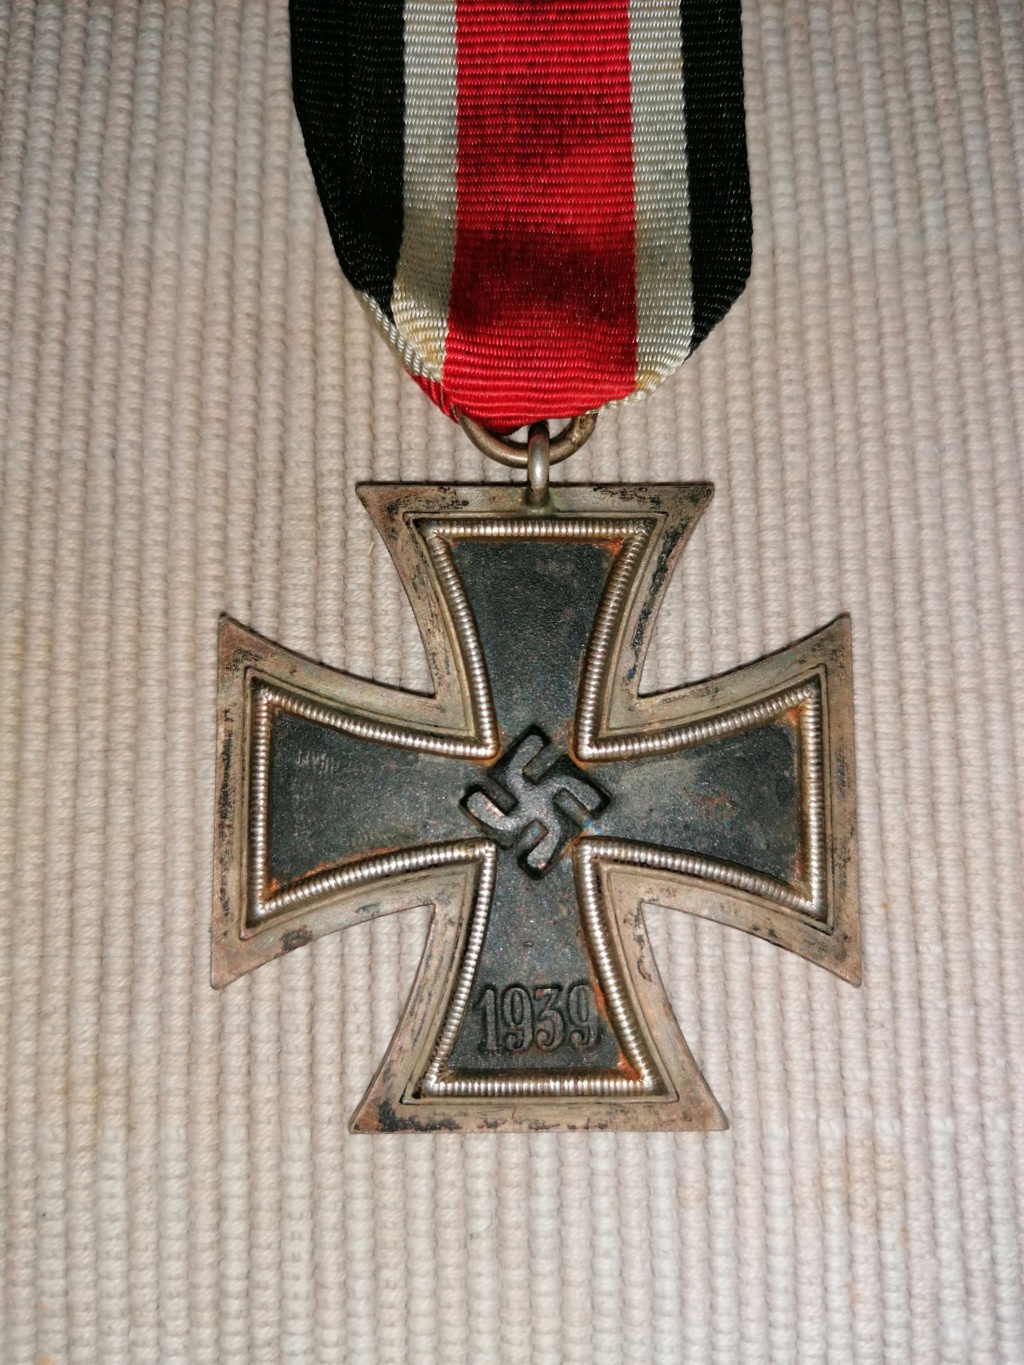 Croix de fer seconde classe ww2  Img_1112